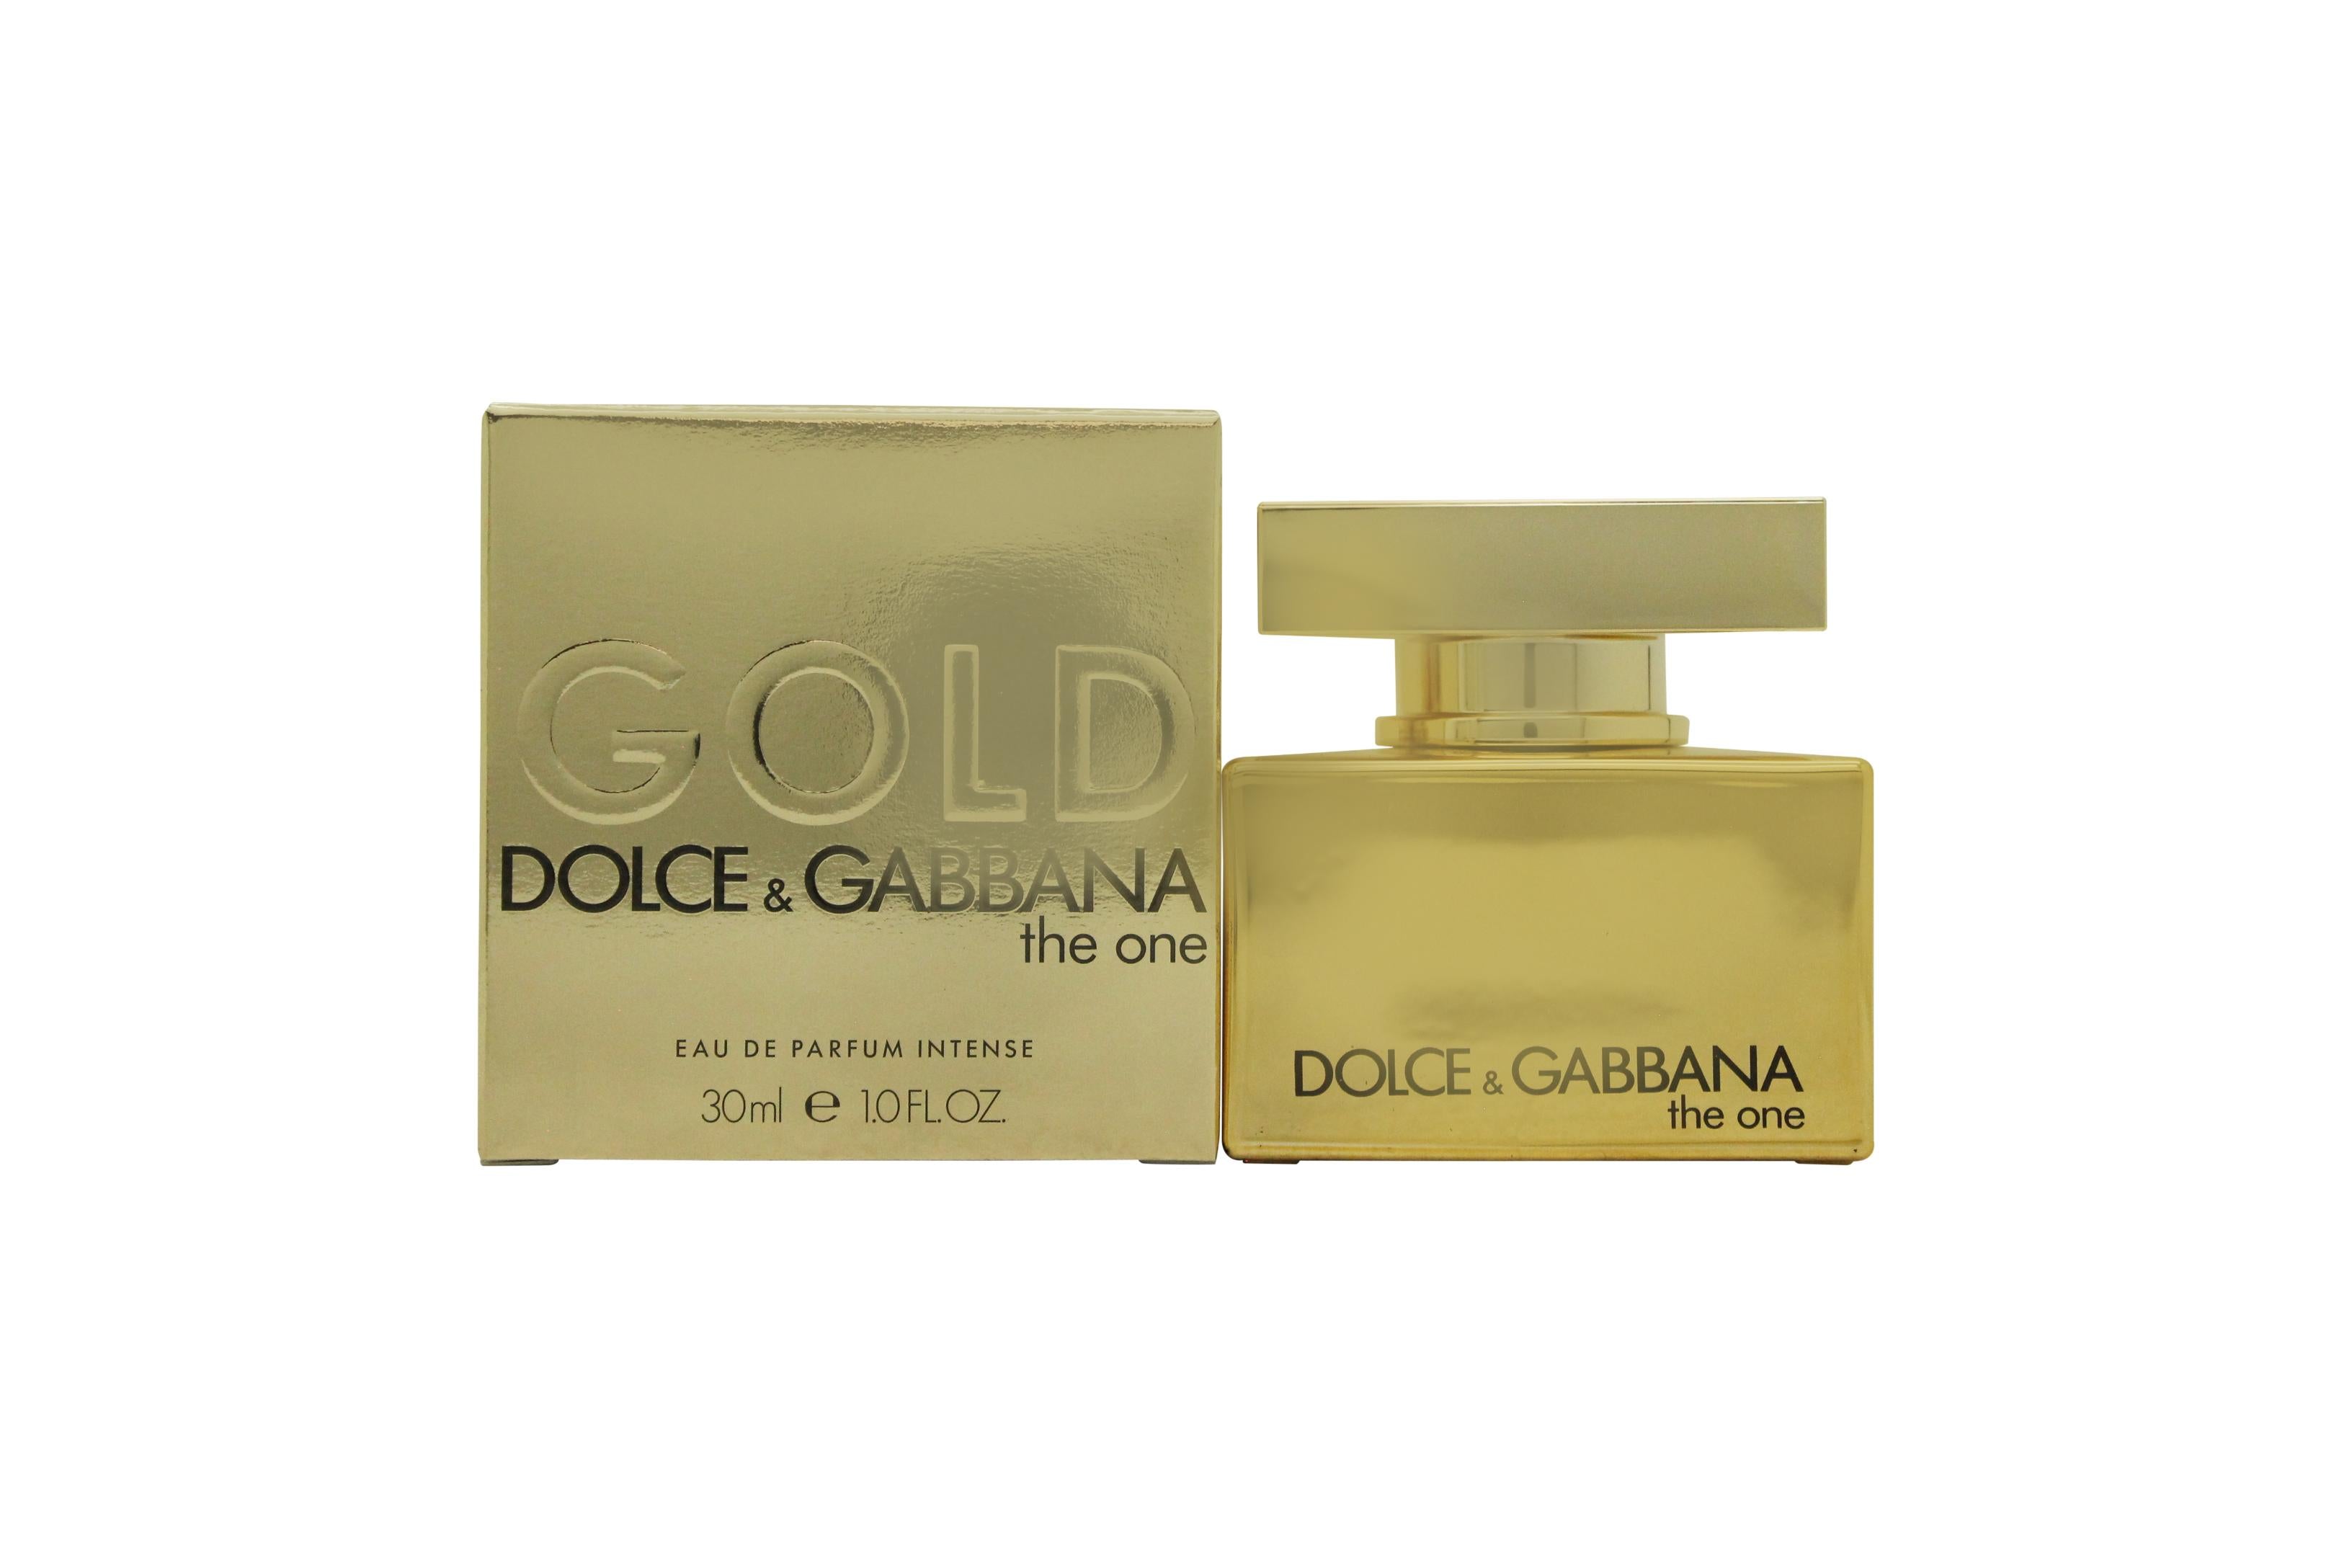 View Dolce Gabbana The One Gold Eau de Parfum Intense 30ml Spray information